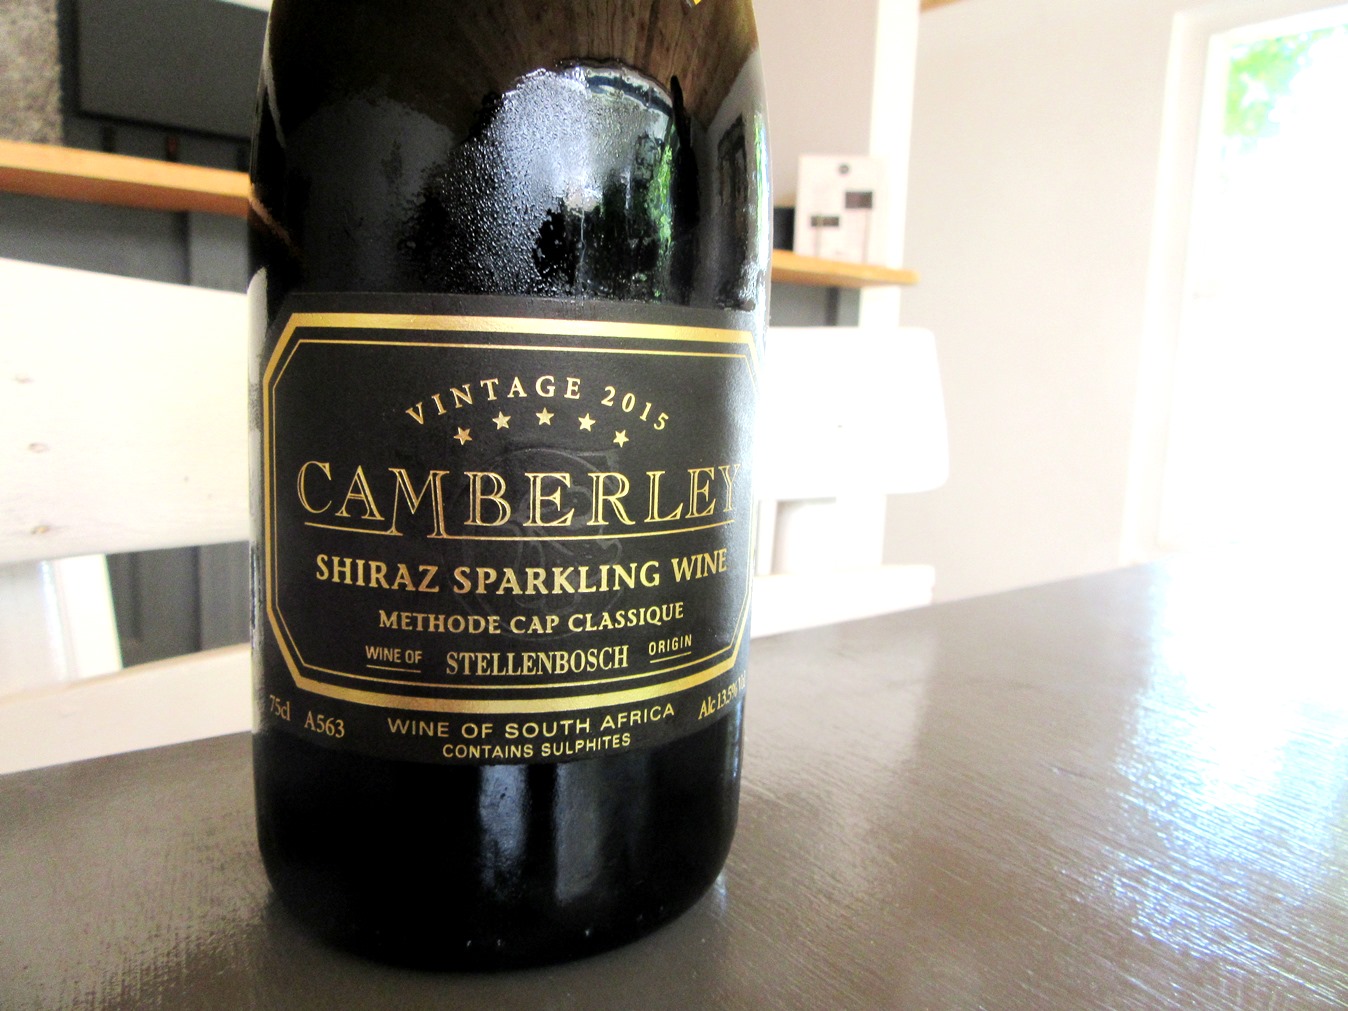 Camberley Methode Cap Classique (MCC) Shiraz Sparkling Wine 2015, Stellenbosch, South Africa, Wine Casual